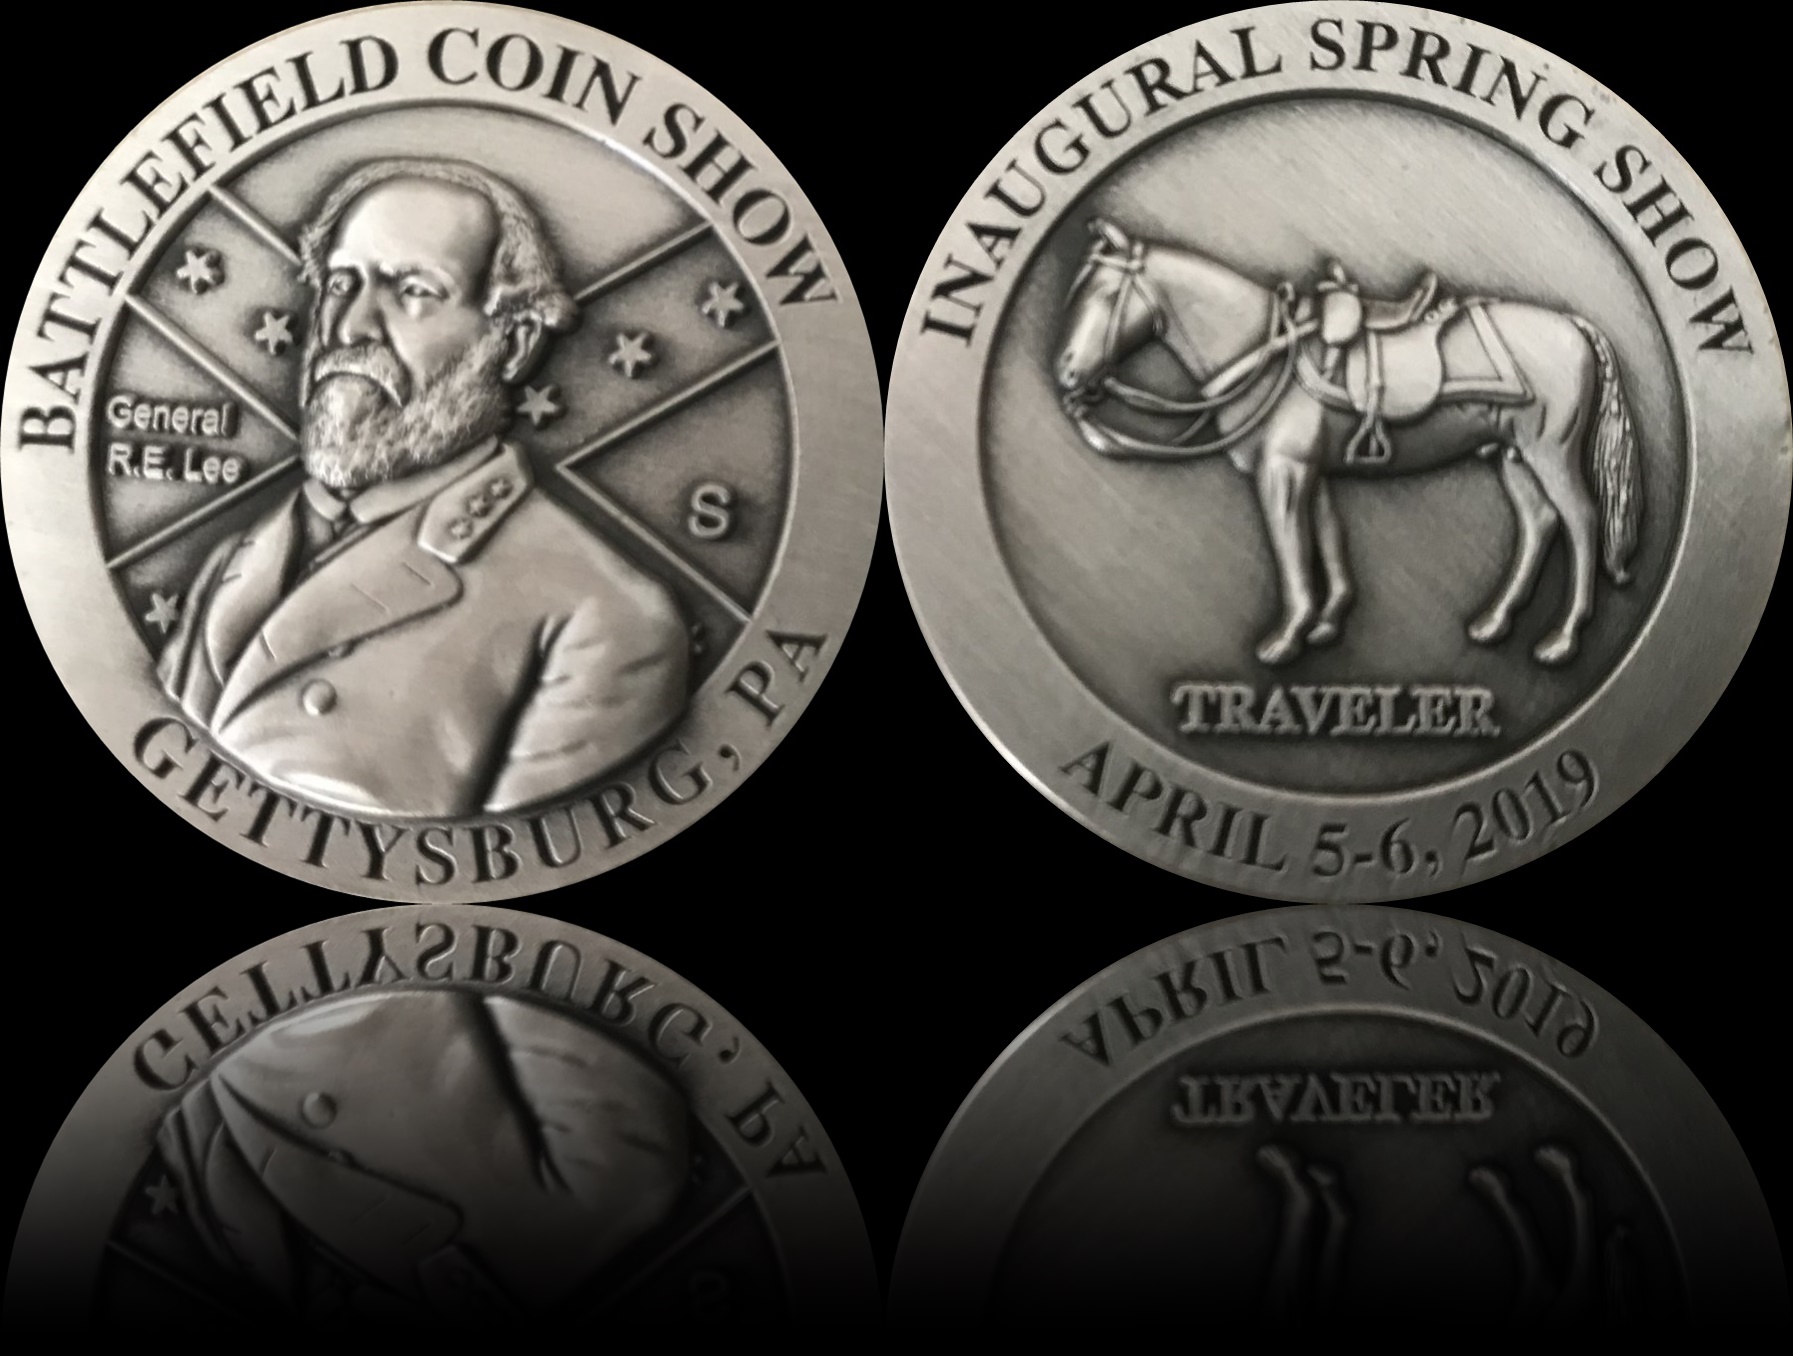 Spring National Battlefield Medal 3.jpg